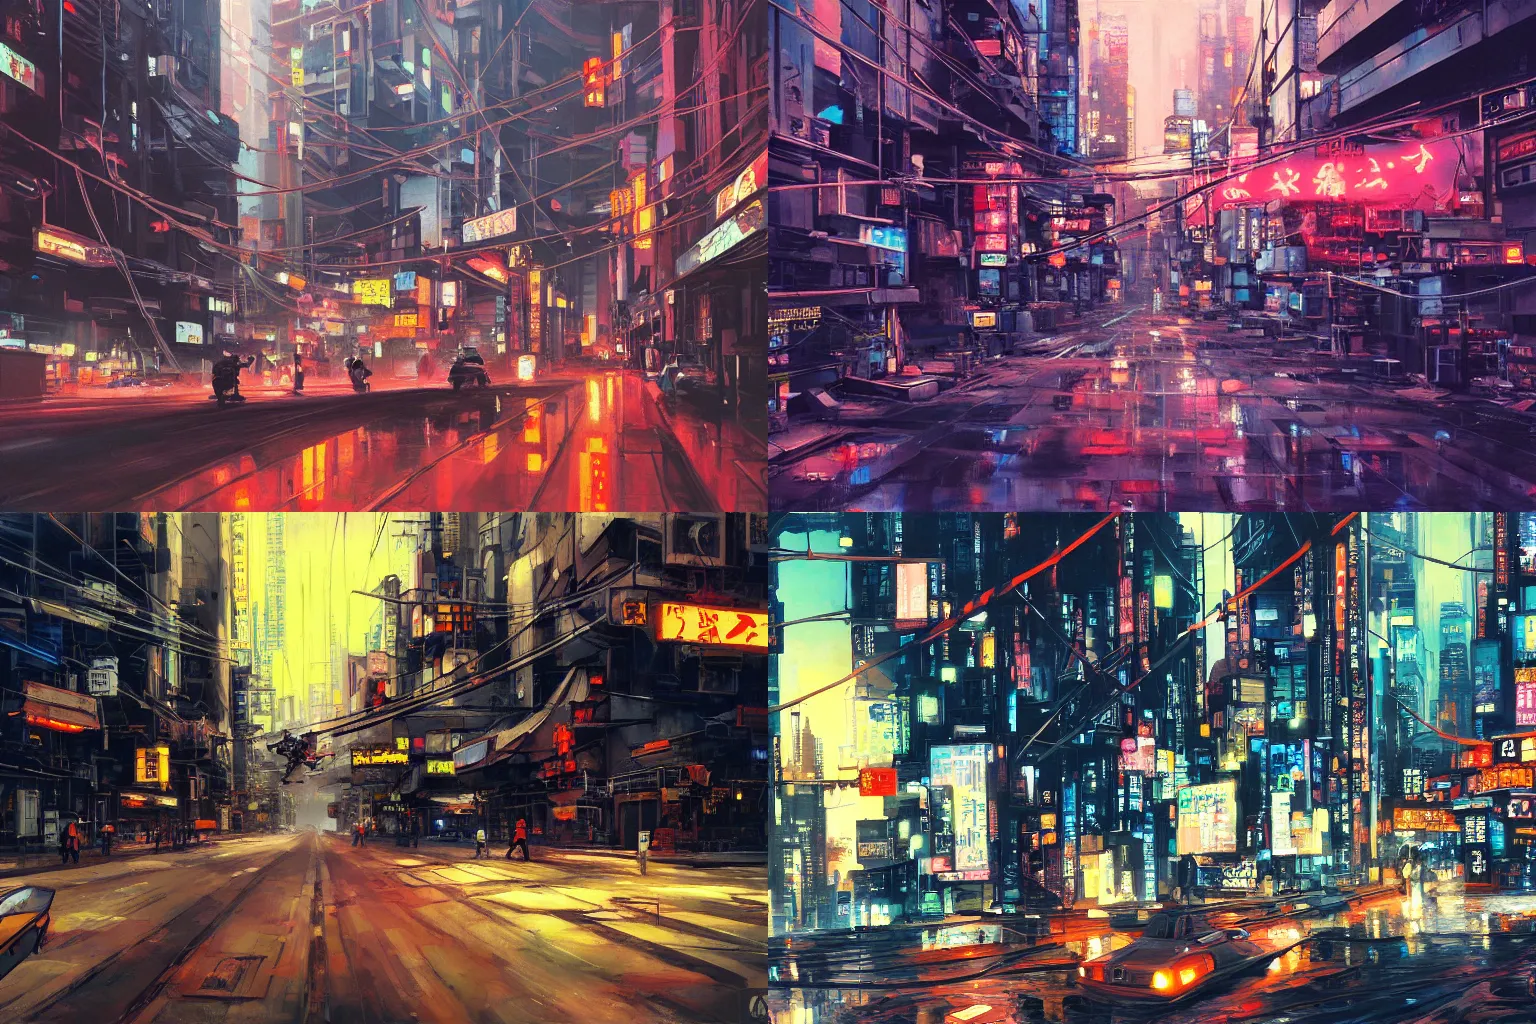 Prompt: oil painting, yoji shinakawa, studio gainax, neo-noir cyberpunk city, dynamic perspective, wires, street